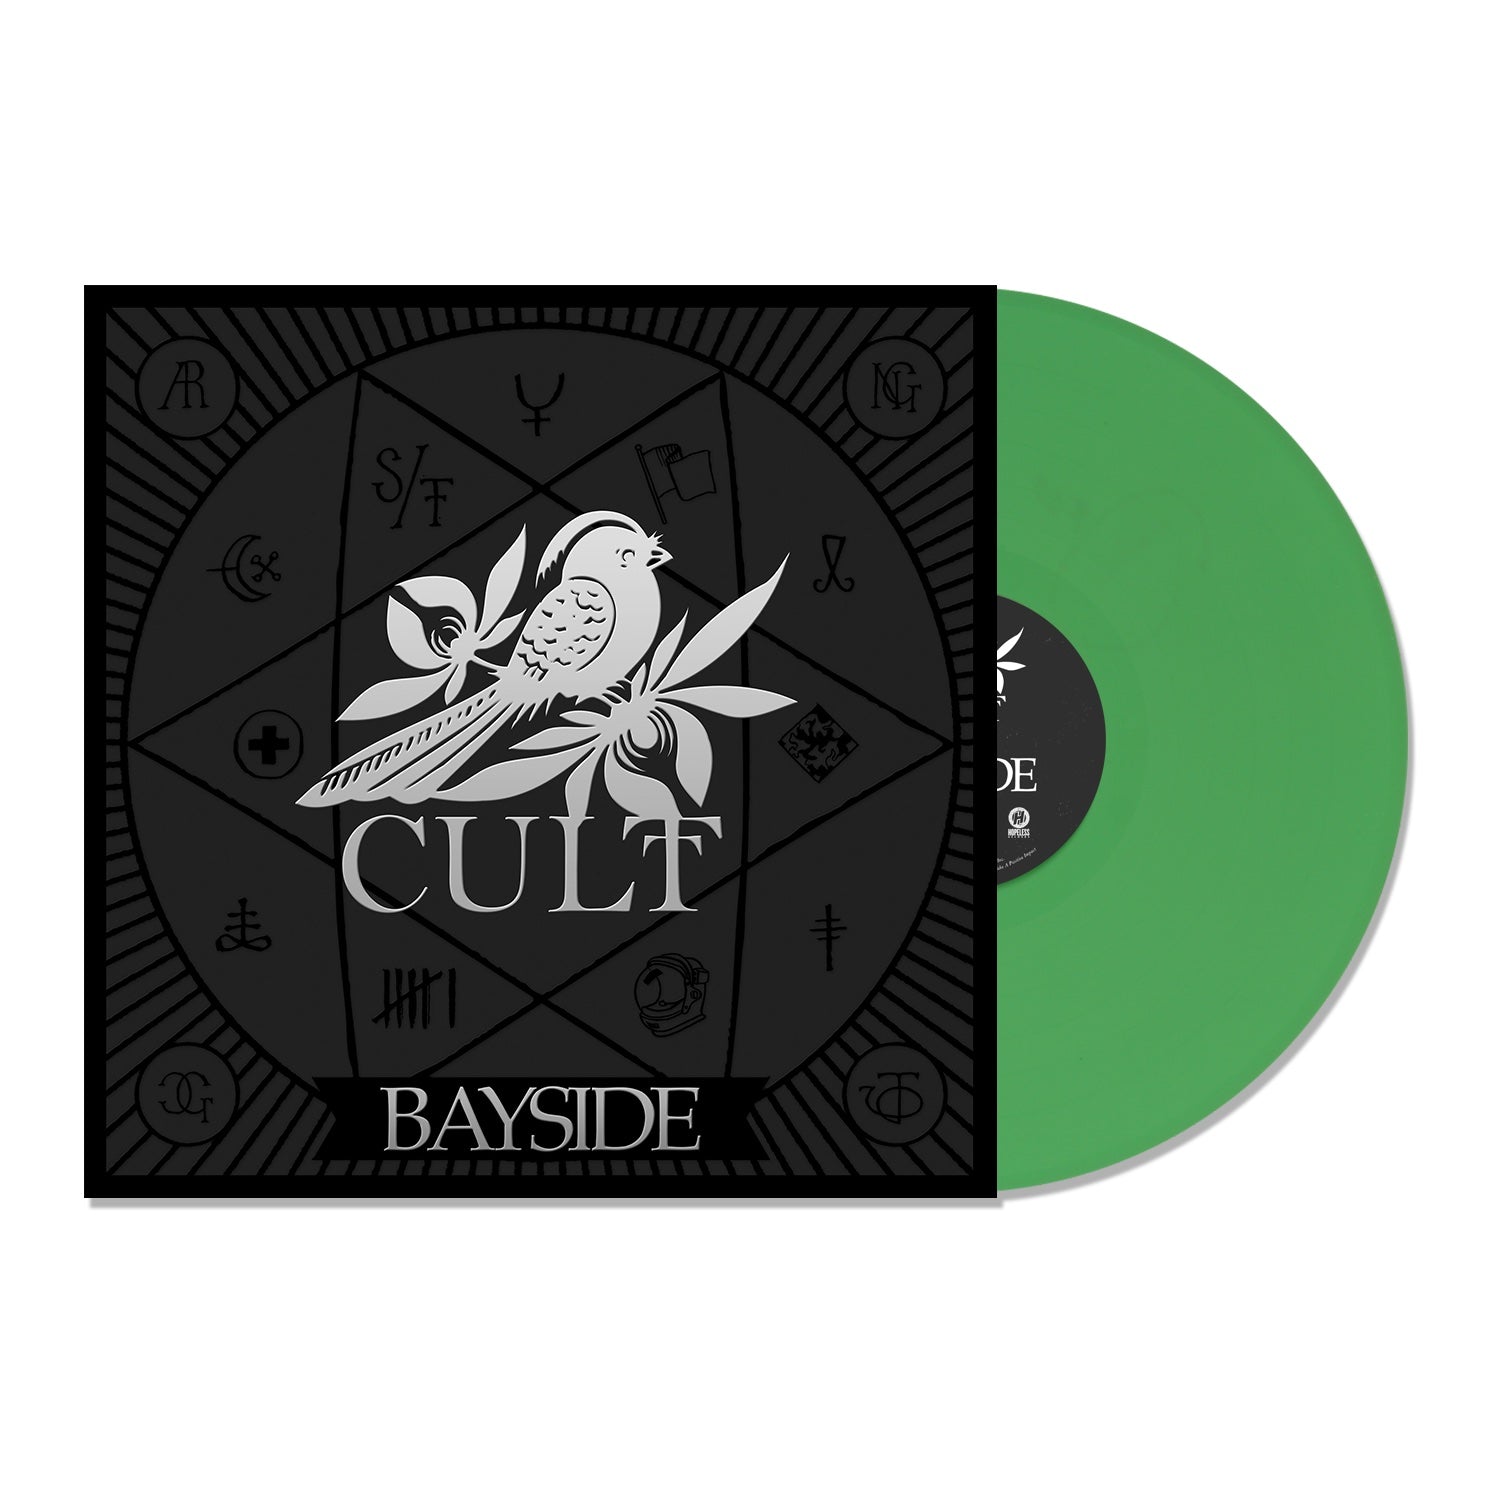 Bayside - Cult: Doublemint Vinyl LP